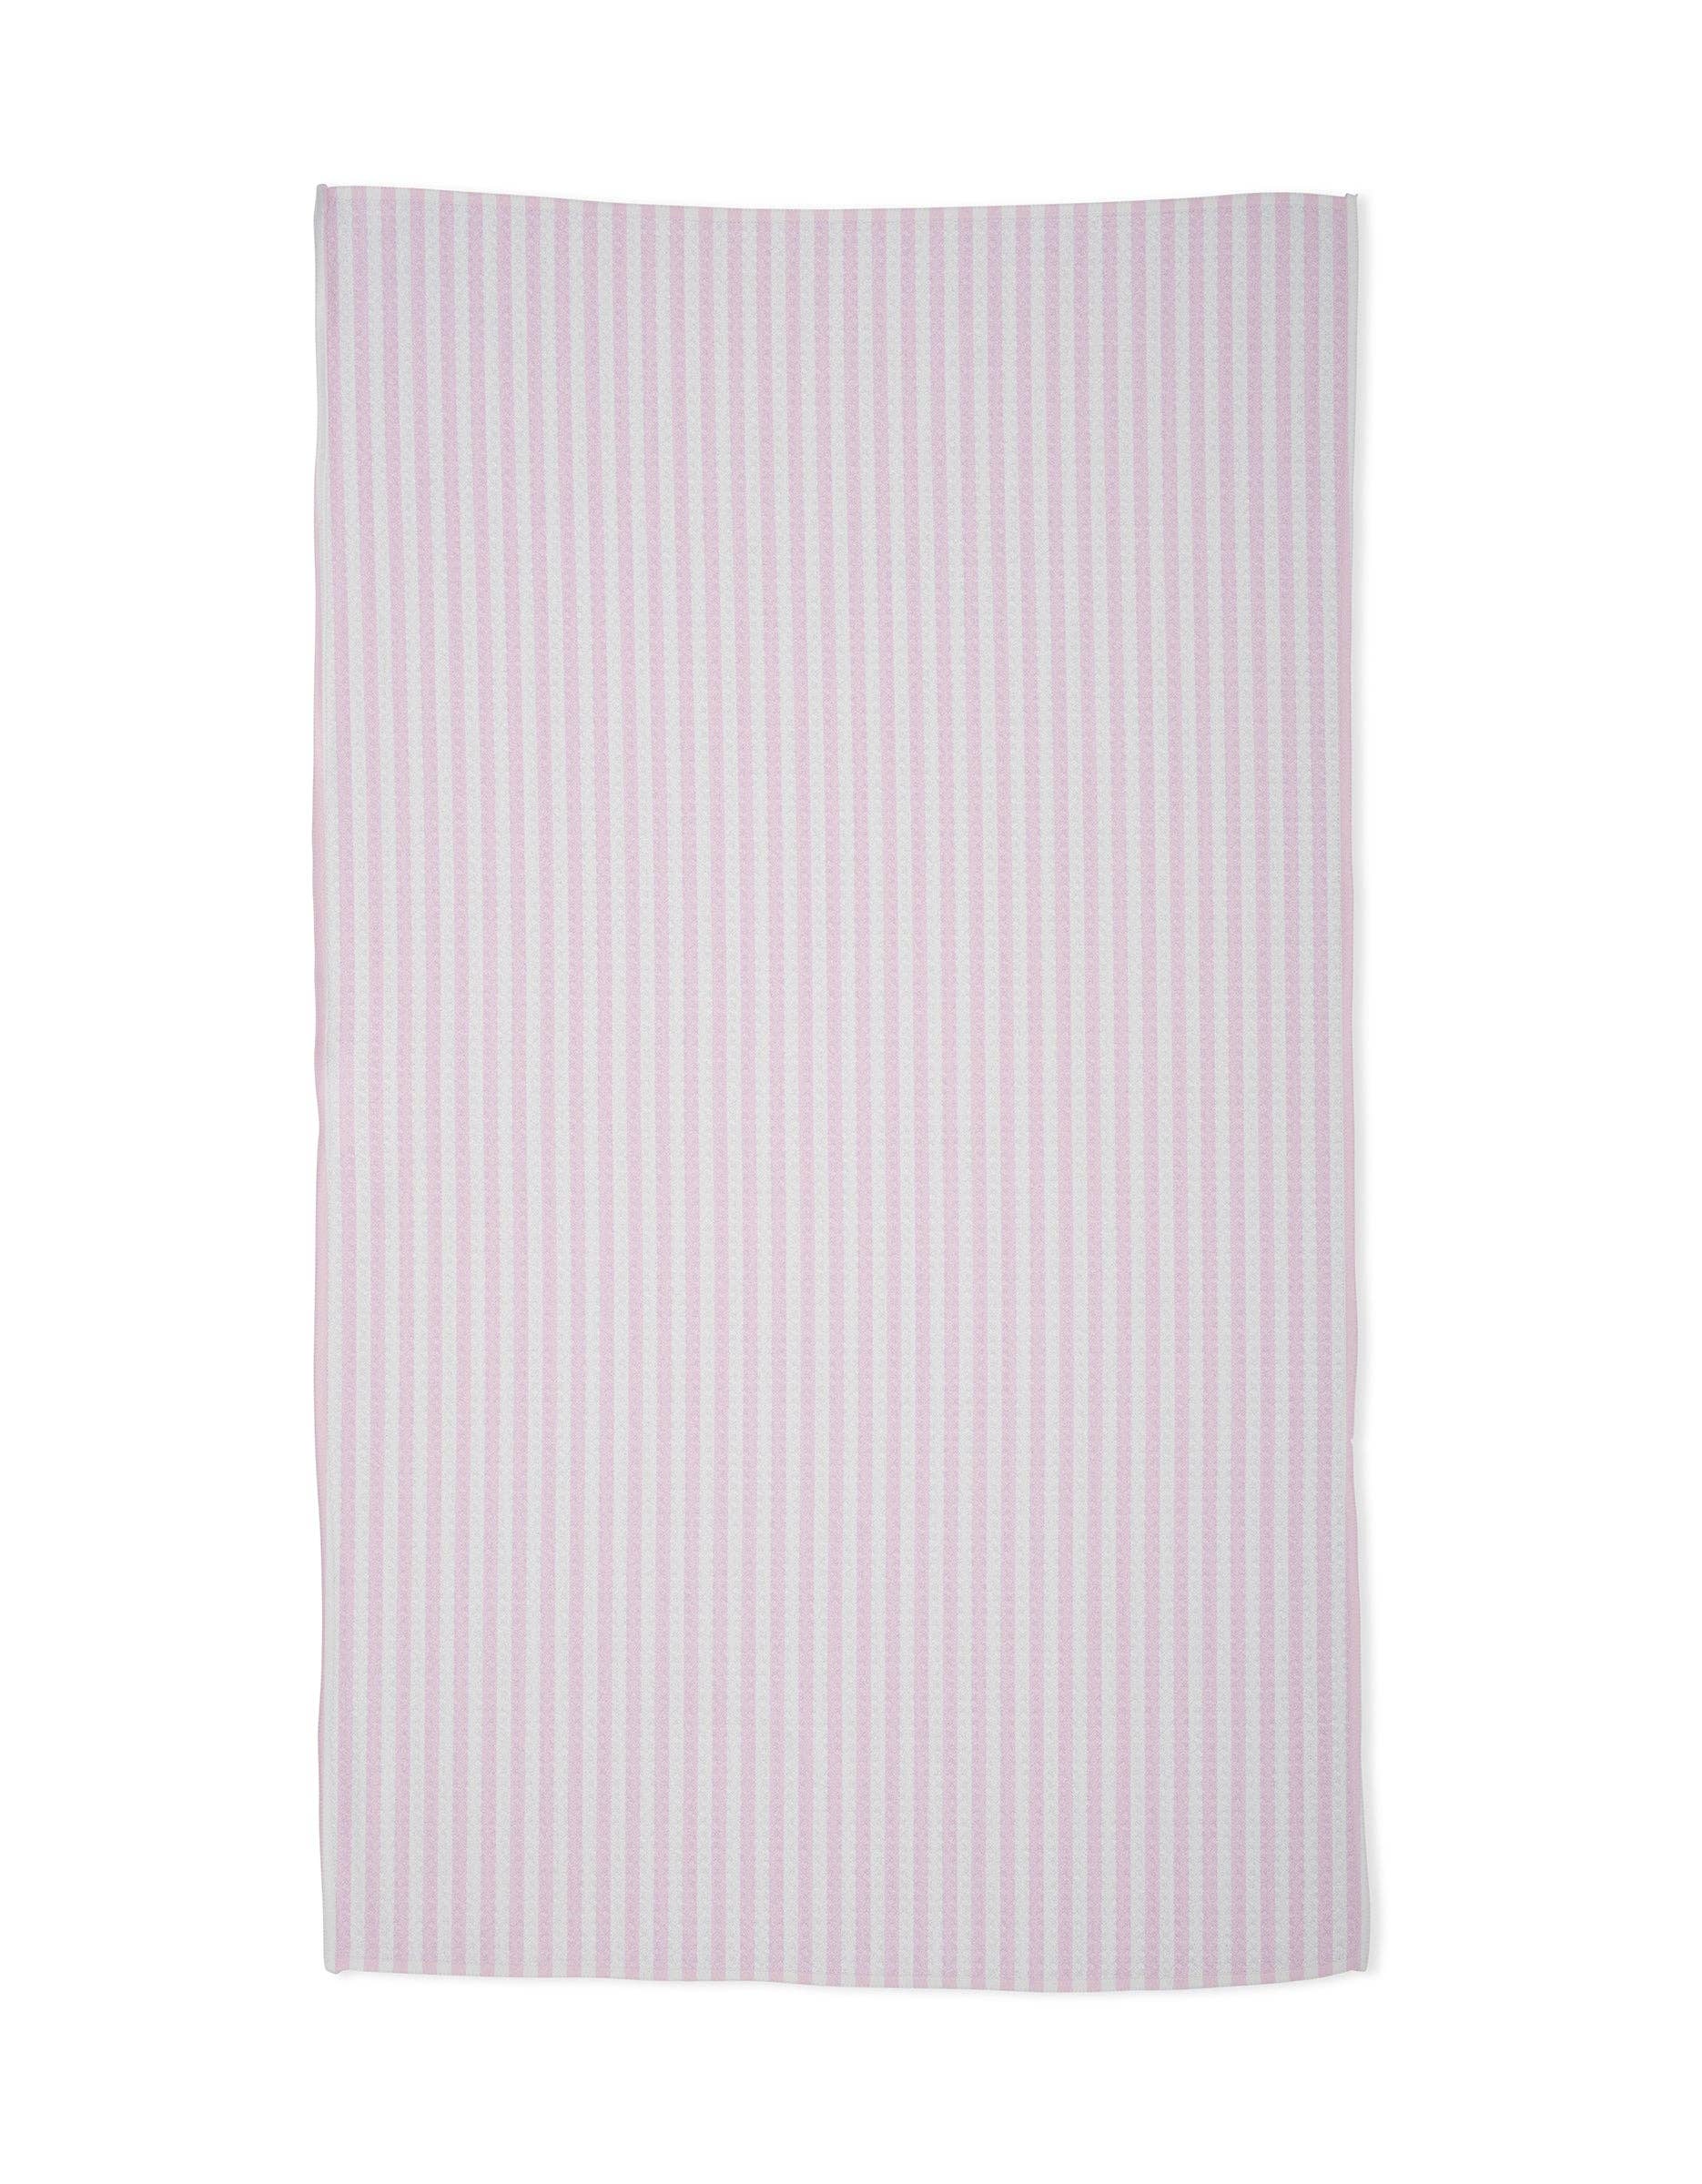 Stripe Pink Geometry Kitchen Towel - The Preppy Bunny